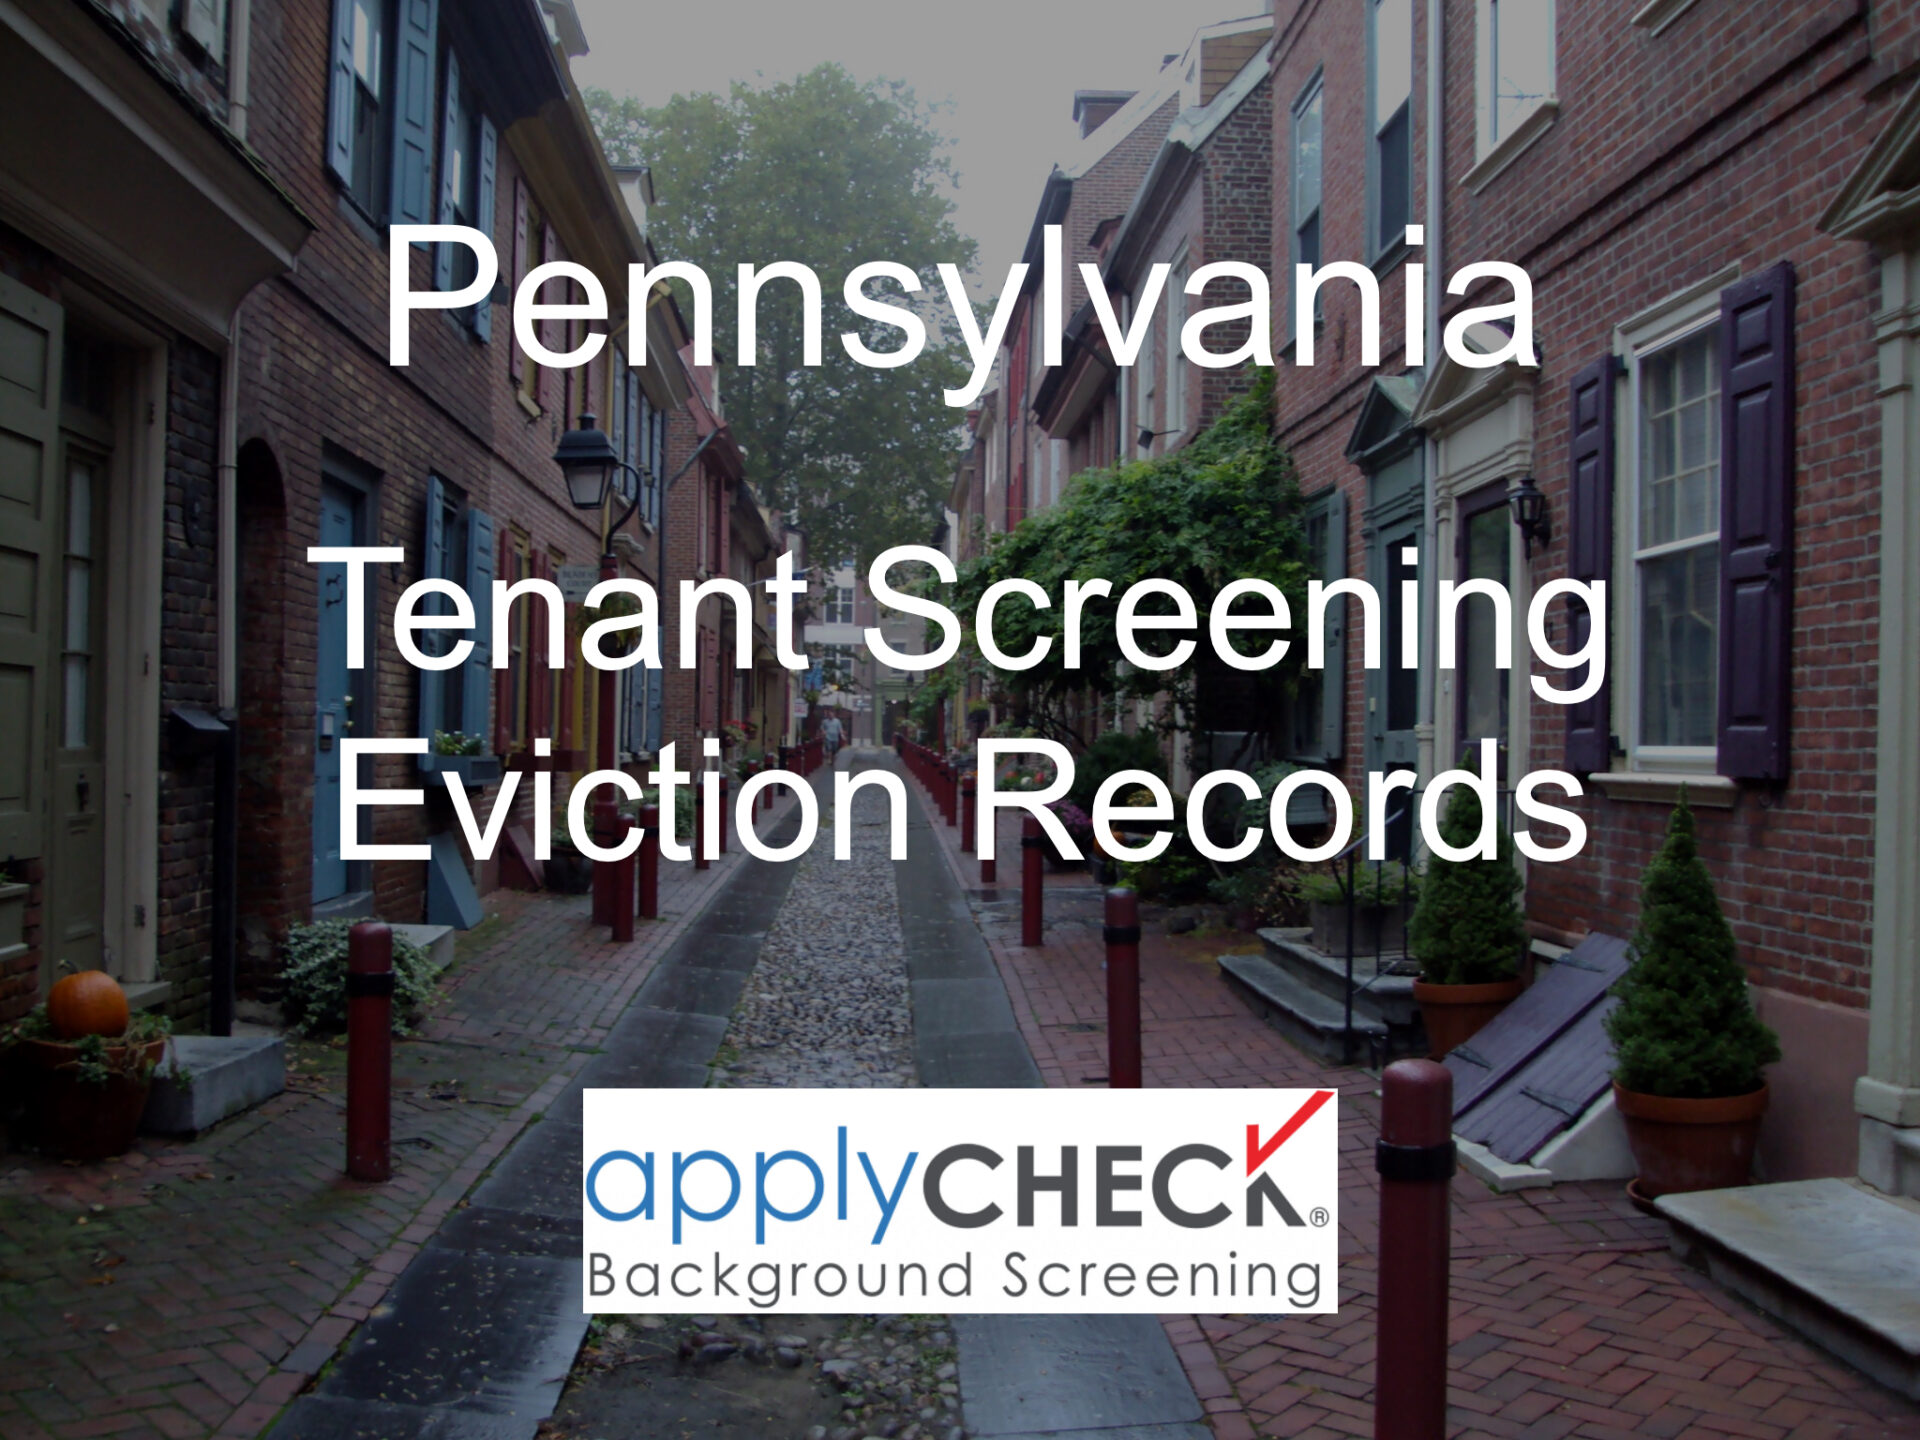 Pennsylvania Tenant Screening and Eviction image